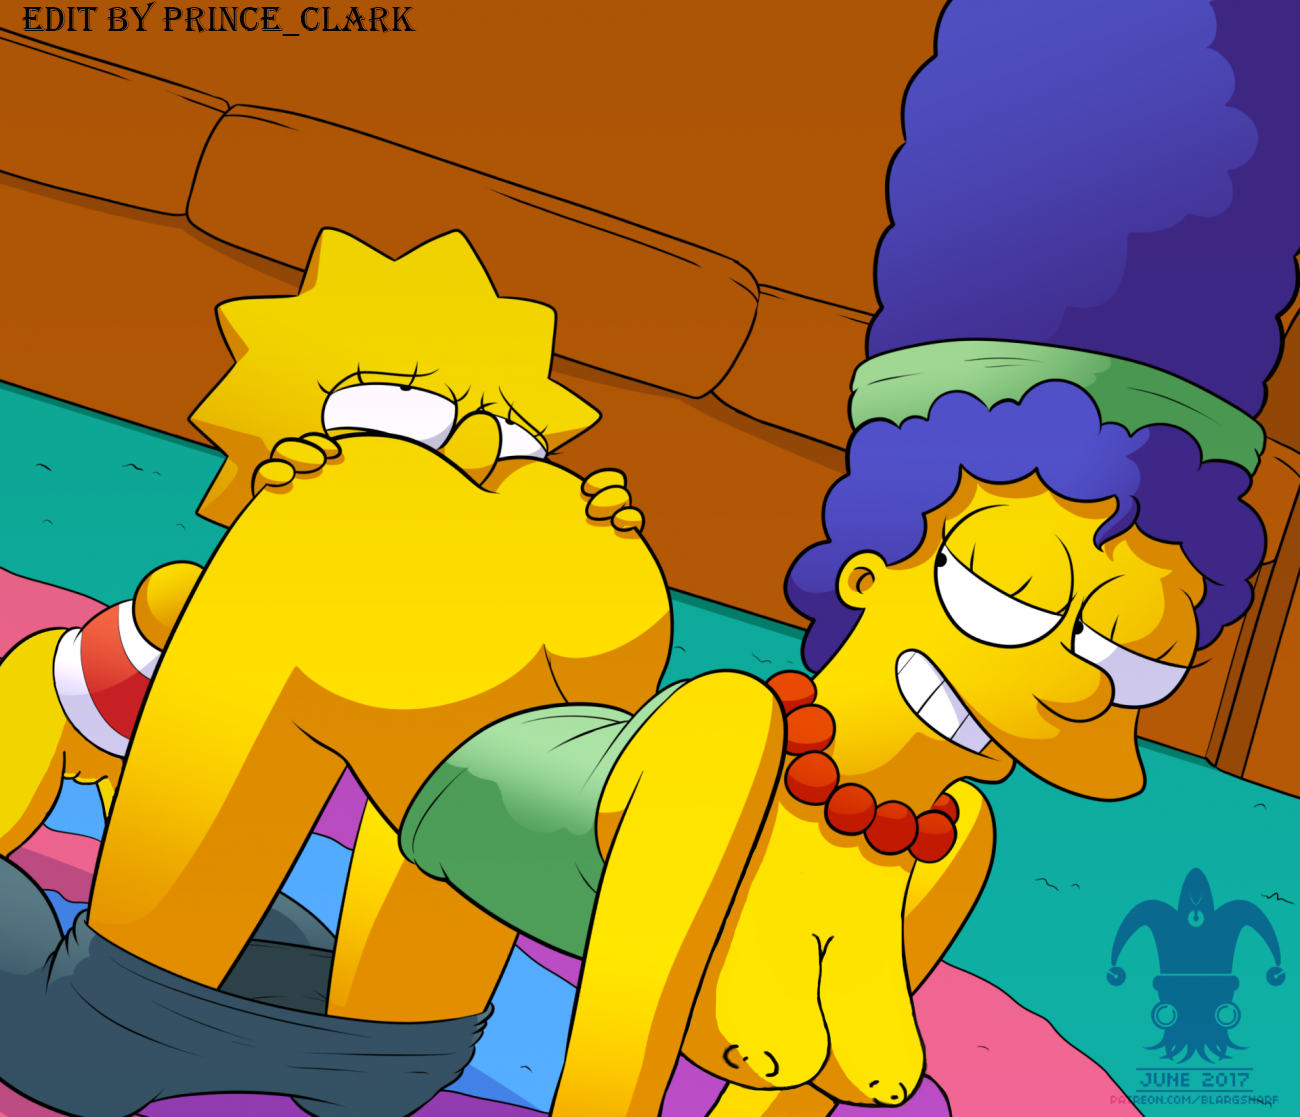 2448577 - Lisa_Simpson Marge_Simpson Prince_Clark The_Simpsons blargsnarf e...